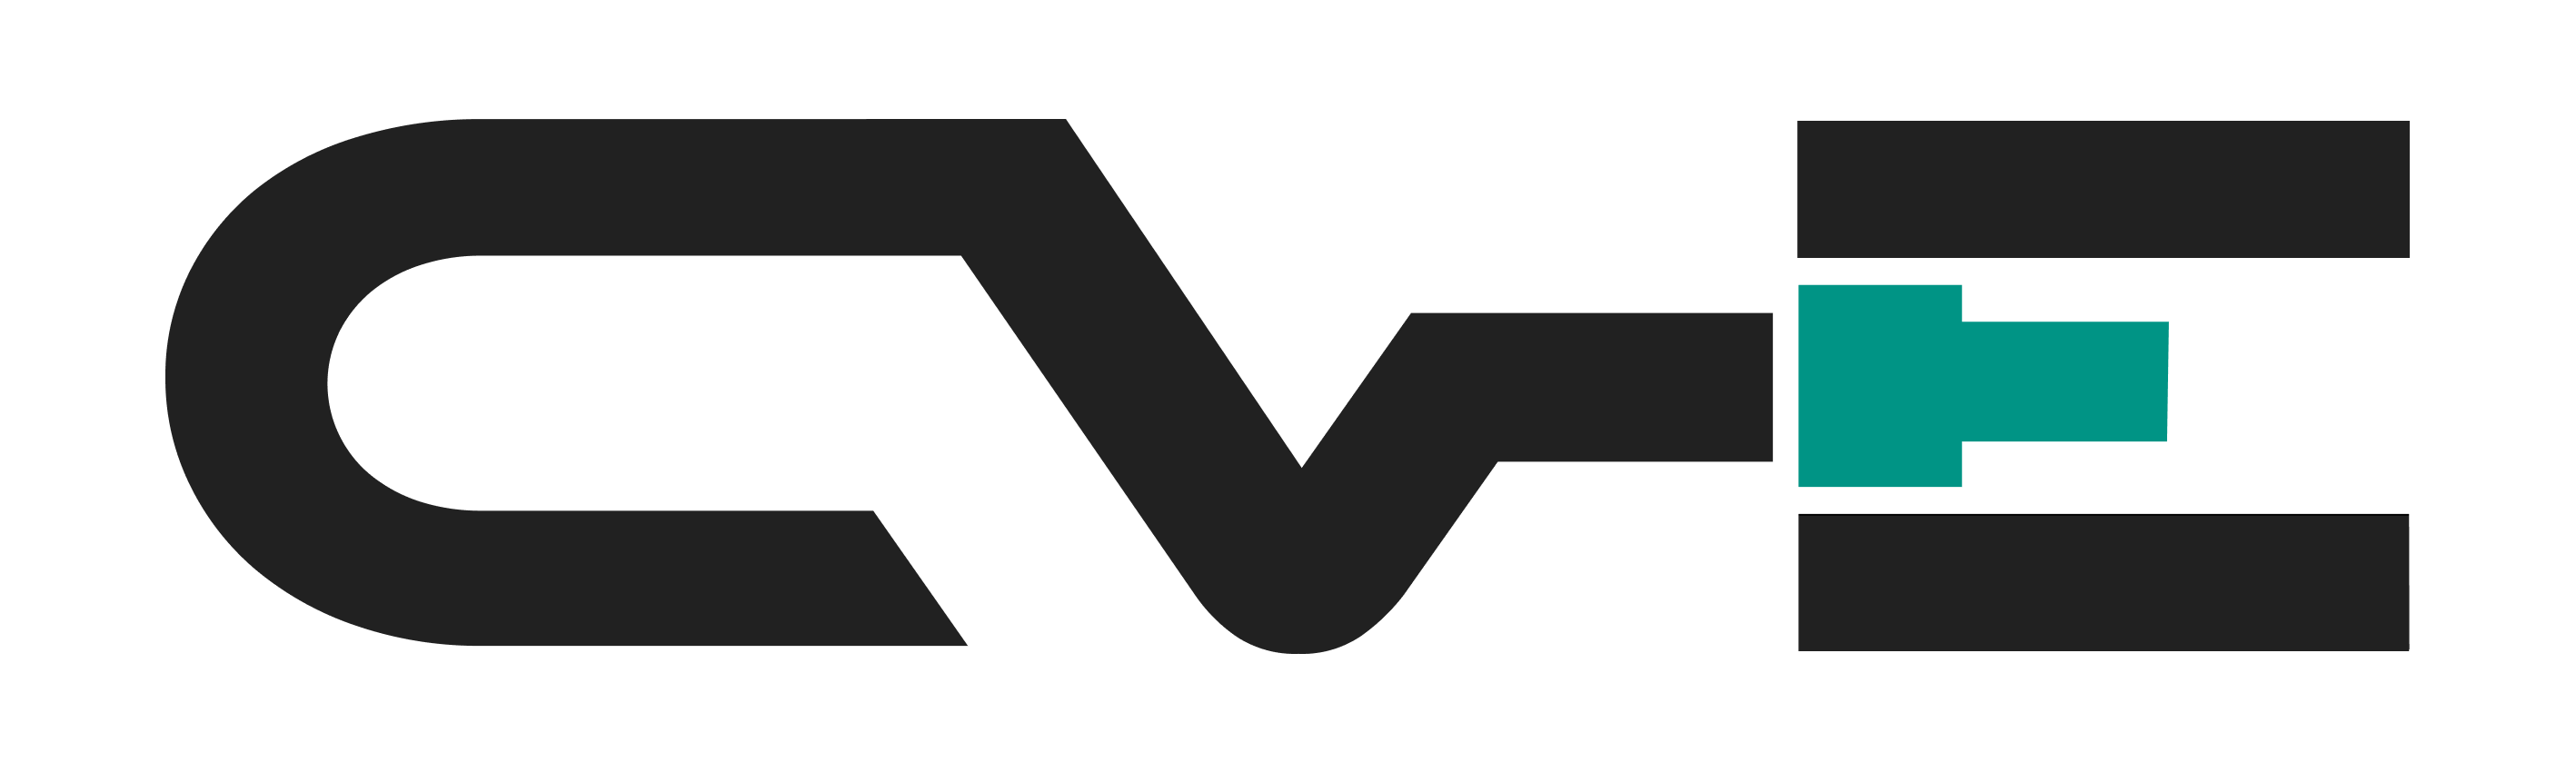 Communication Video Engineering Srl logo